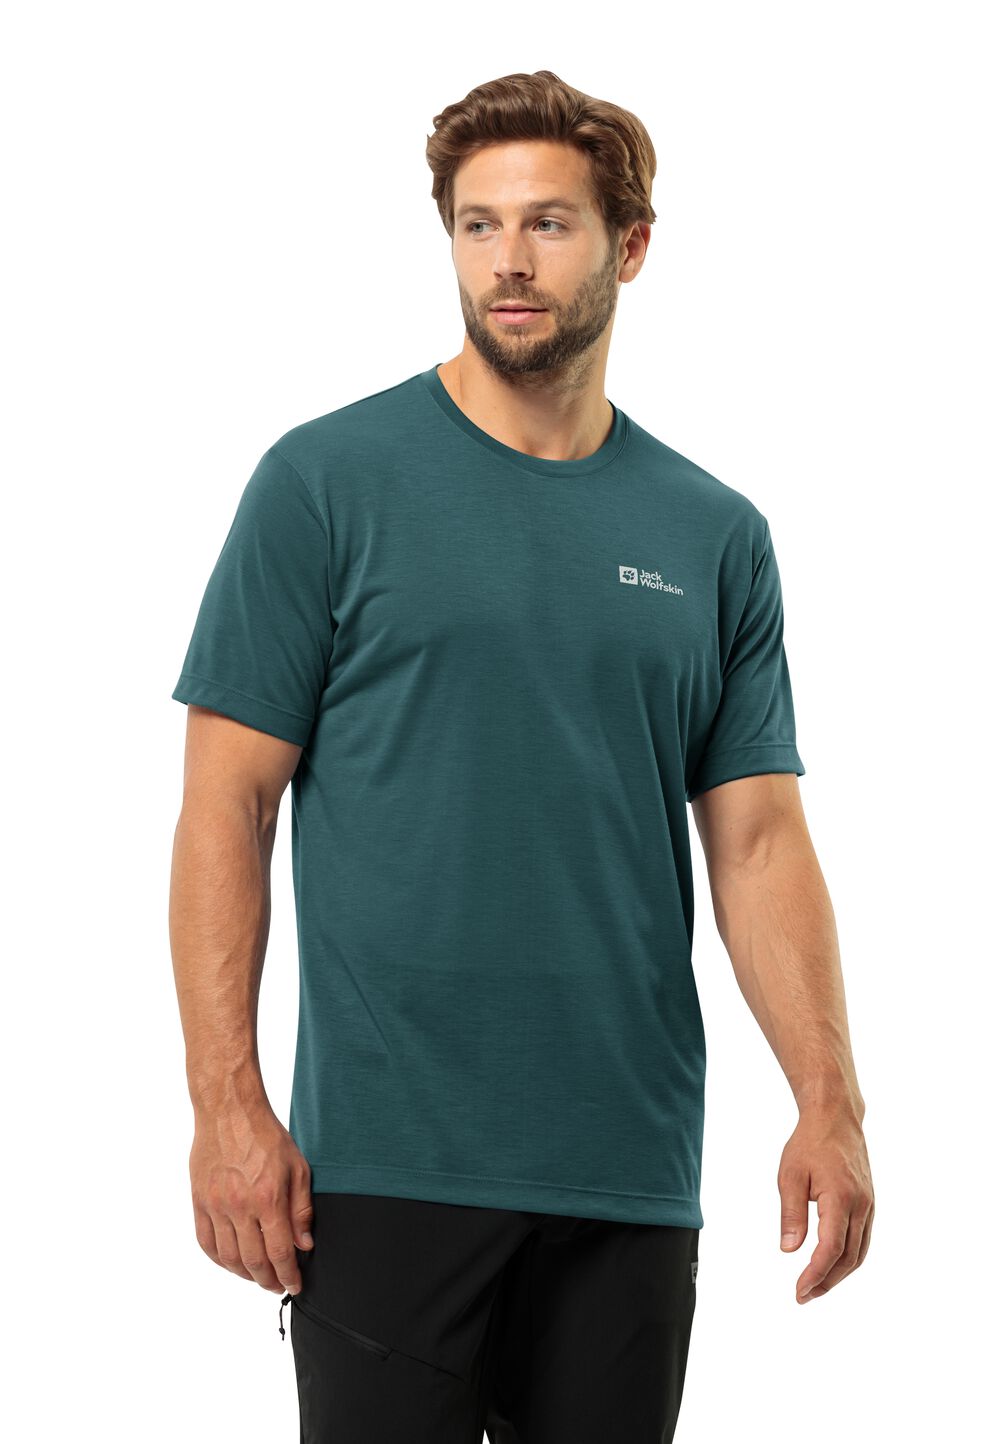 Jack Wolfskin Vonnan S S T-Shirt Men Functioneel shirt Heren L emerald